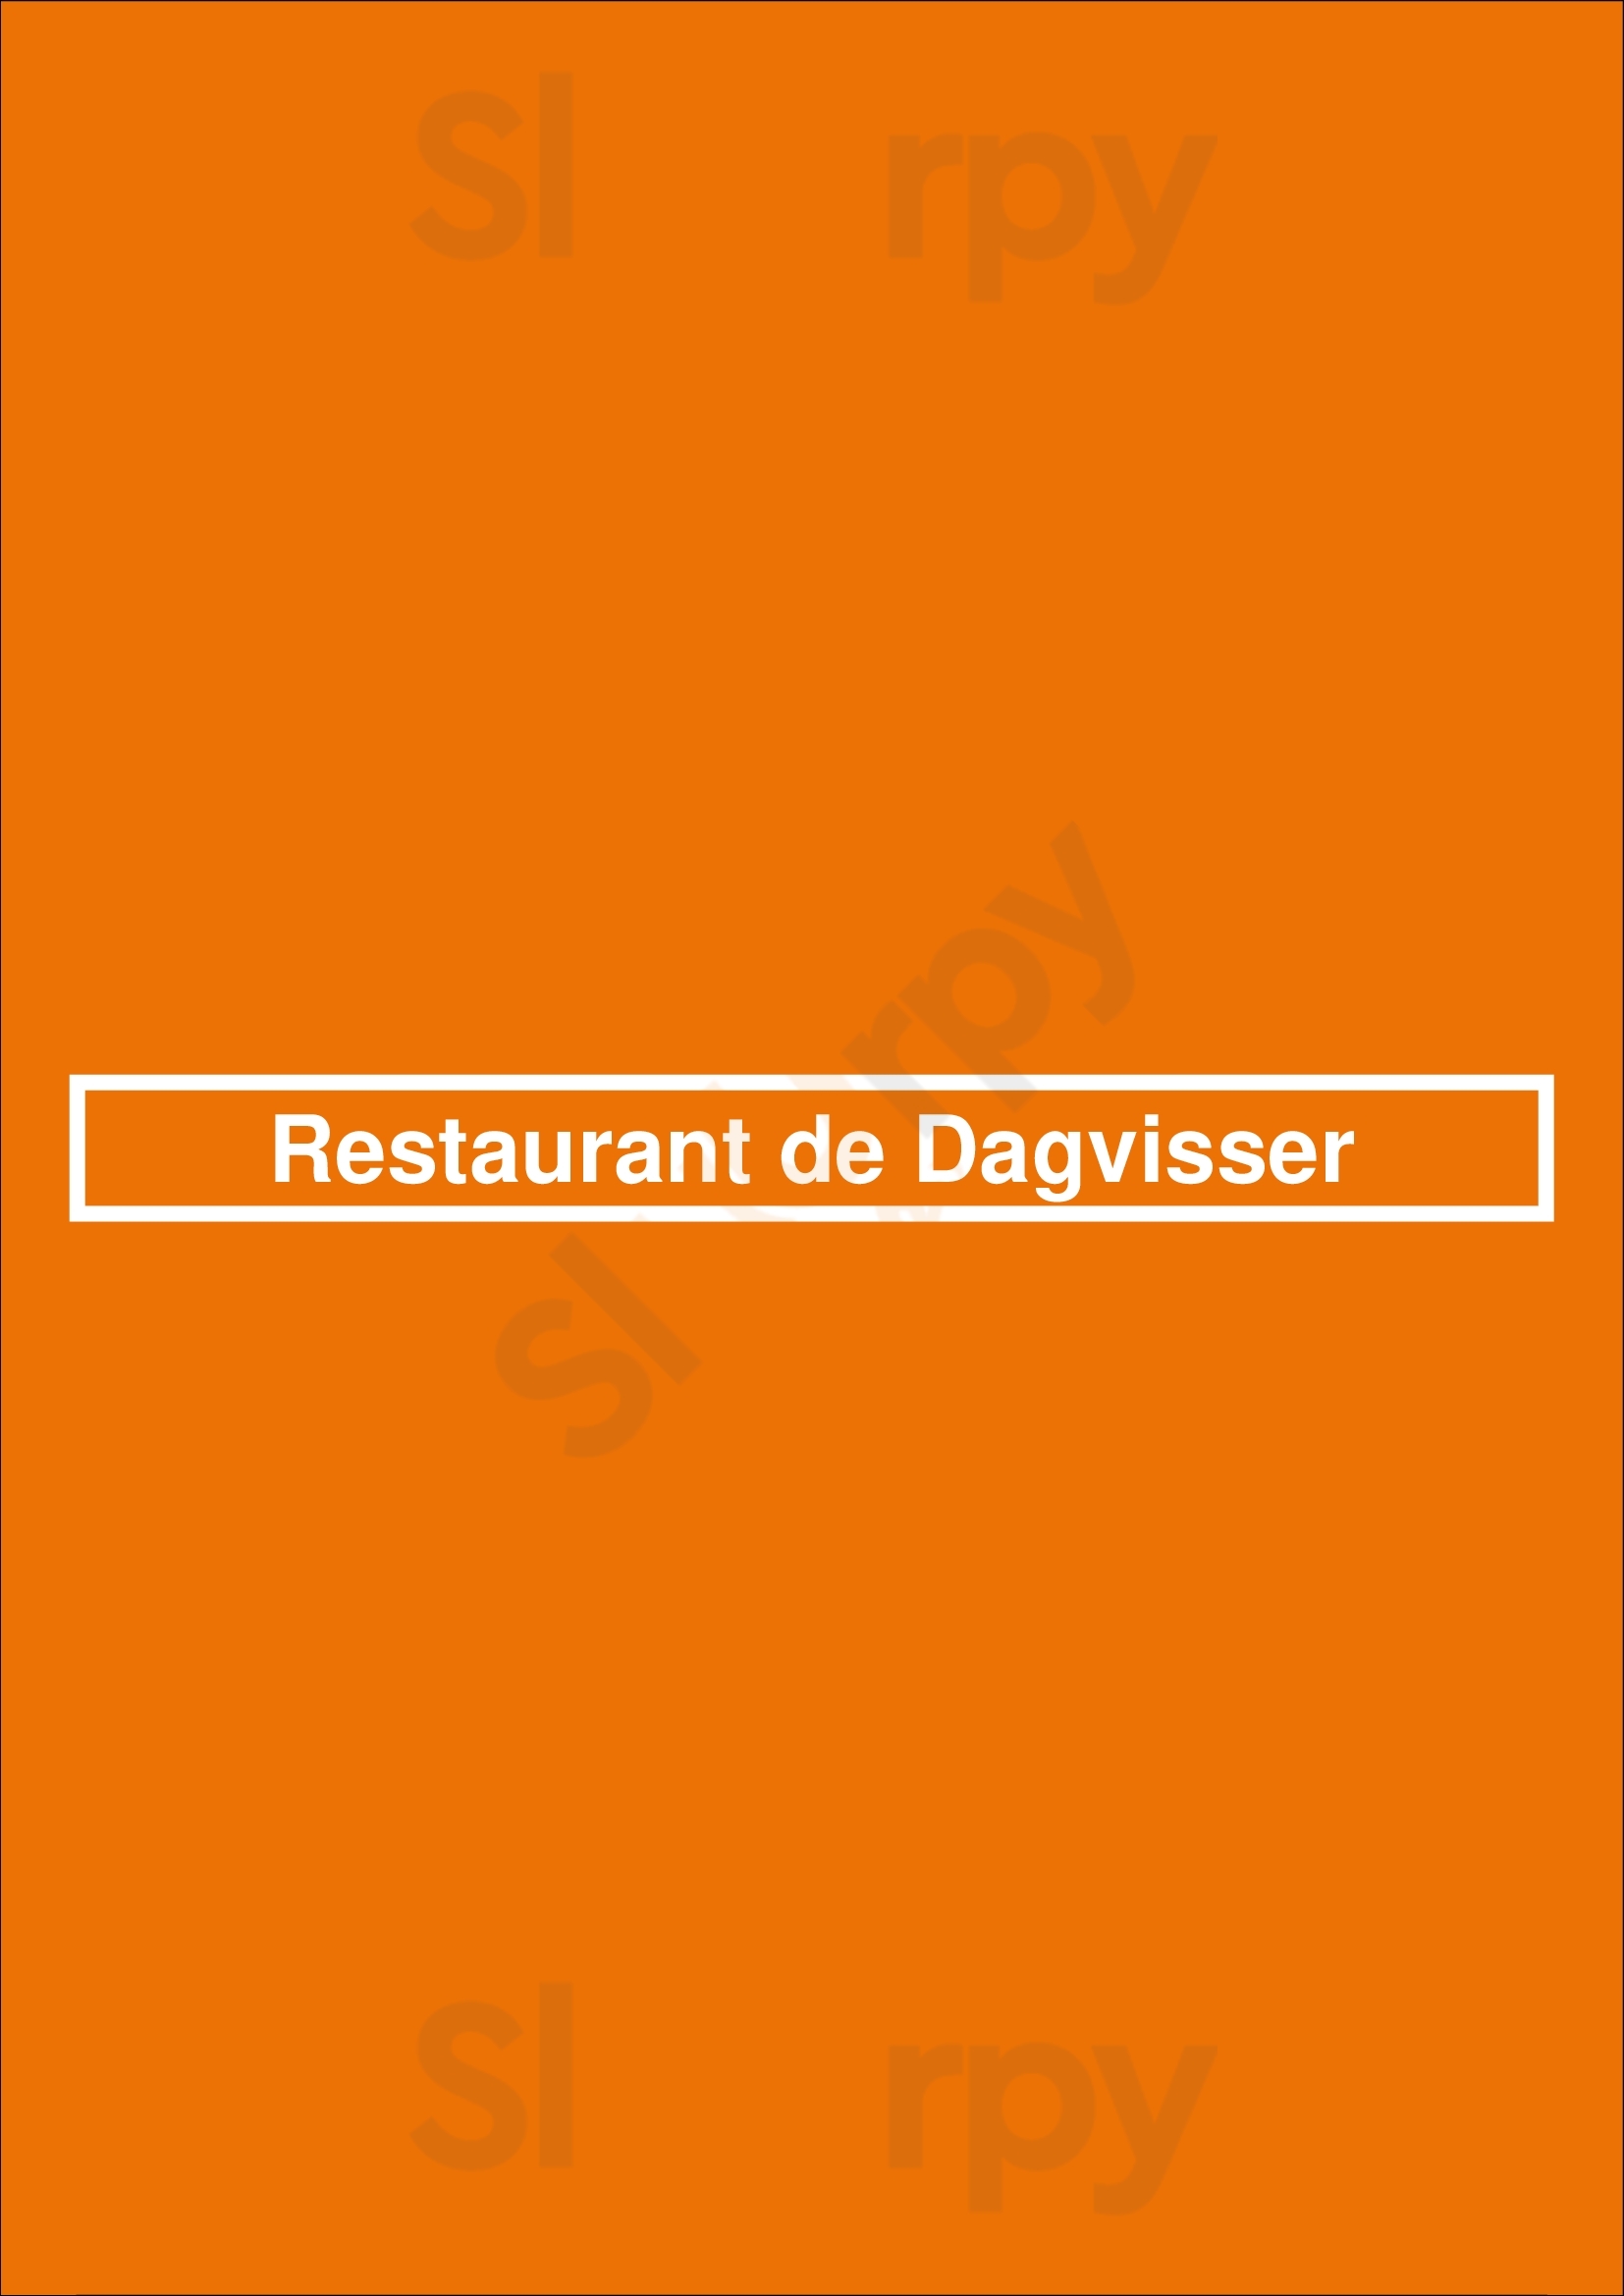 Restaurant De Dagvisser Scheveningen Menu - 1